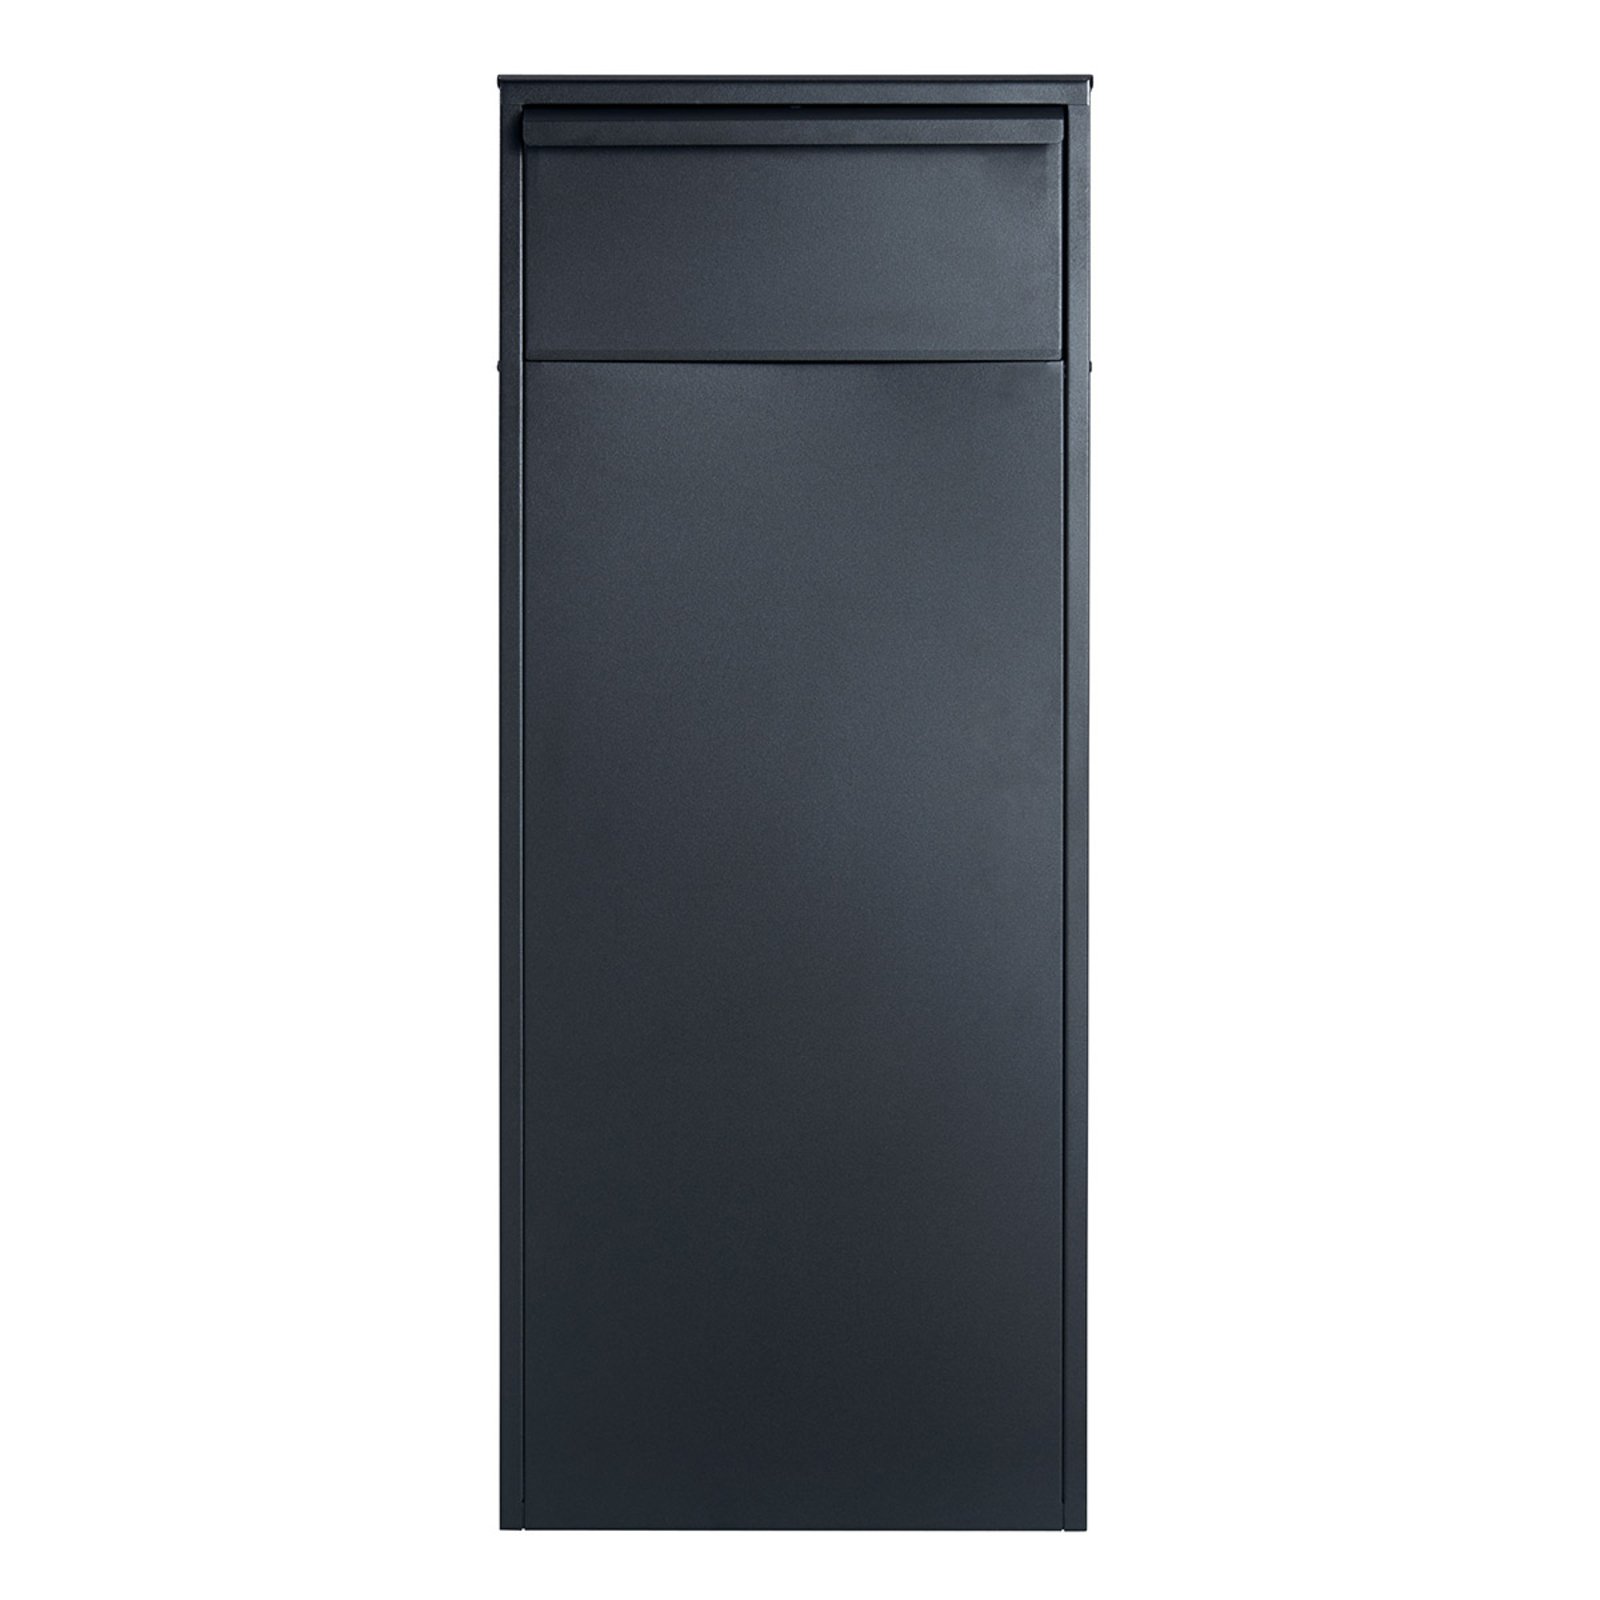 Allux 800S-B frittstående postkasse i svart